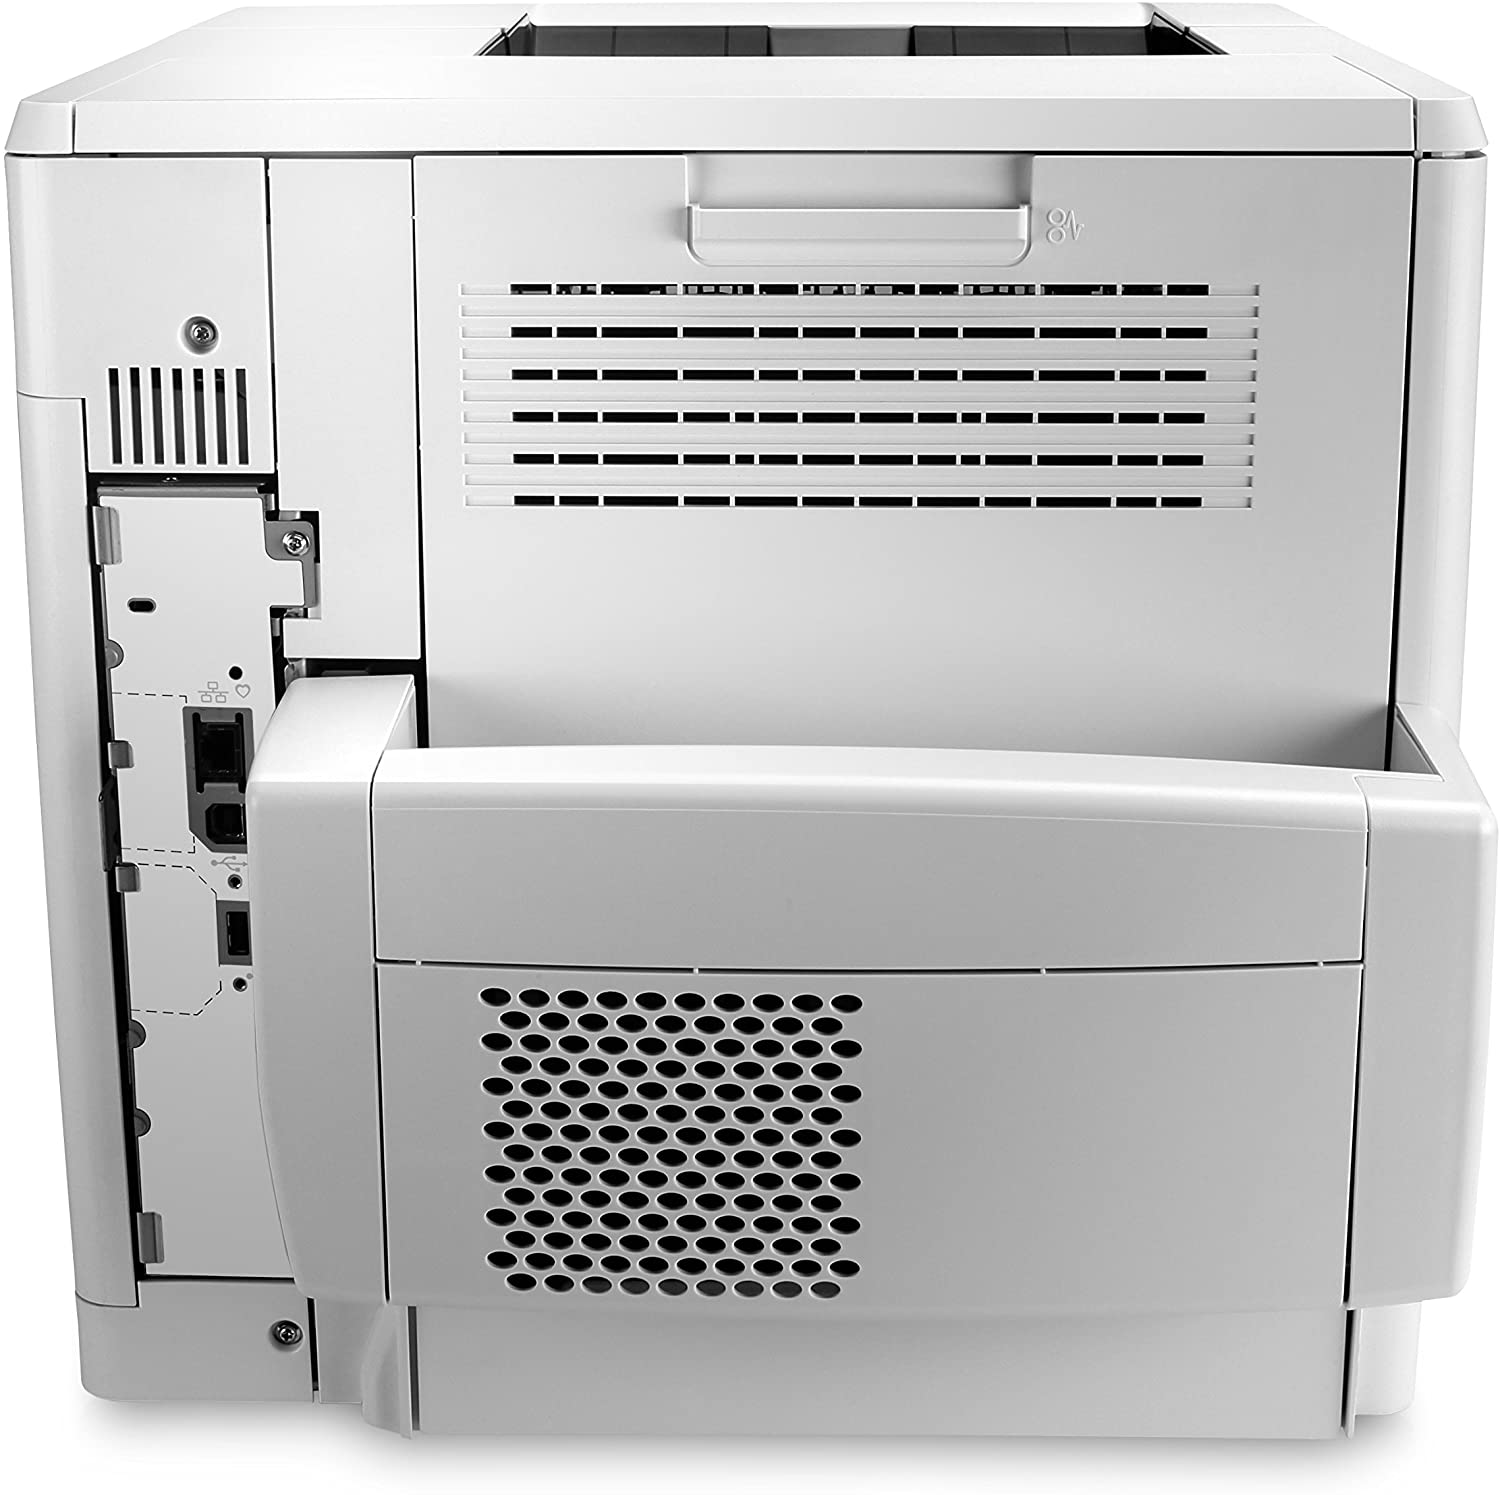 HP LaserJet Enterprise M605dn Monochrom-Laserdrucker S/W A4 Duplex Duplex Netzwerk 55 Seiten pro Minute